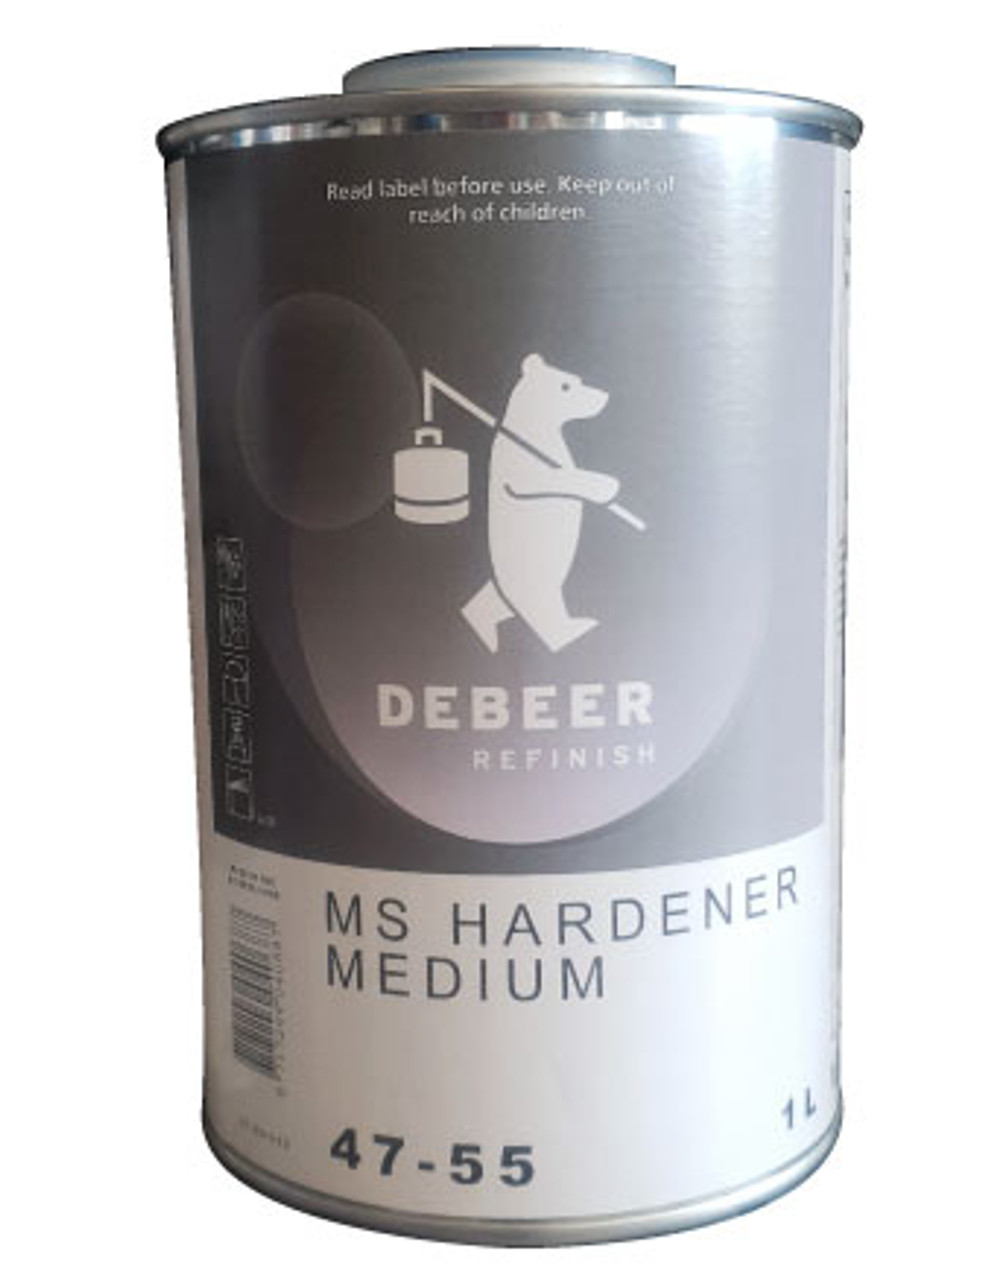 Debeer 4755 MS Hardener Medium Liter